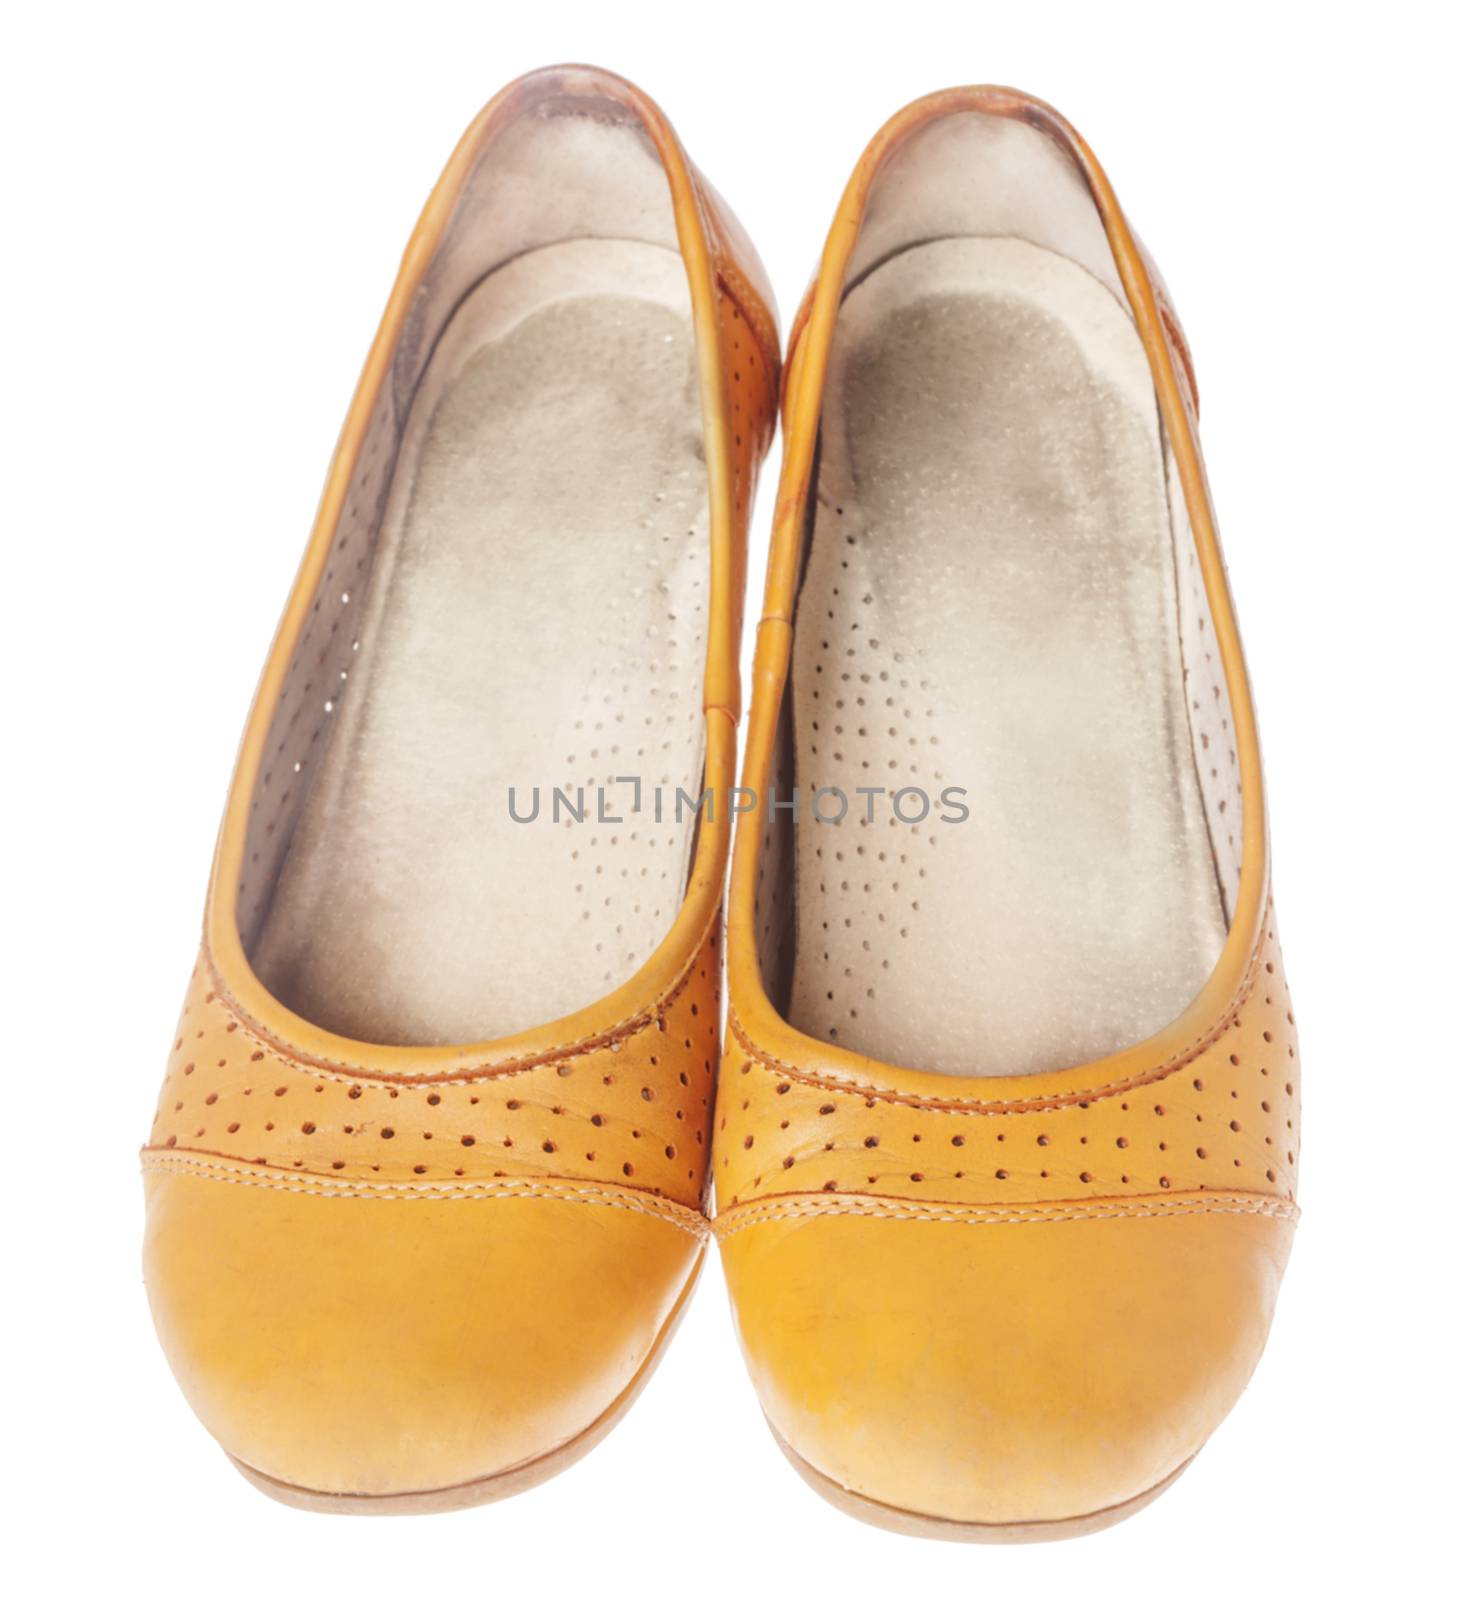 Comfortable orange leather flat shoes isolated on white